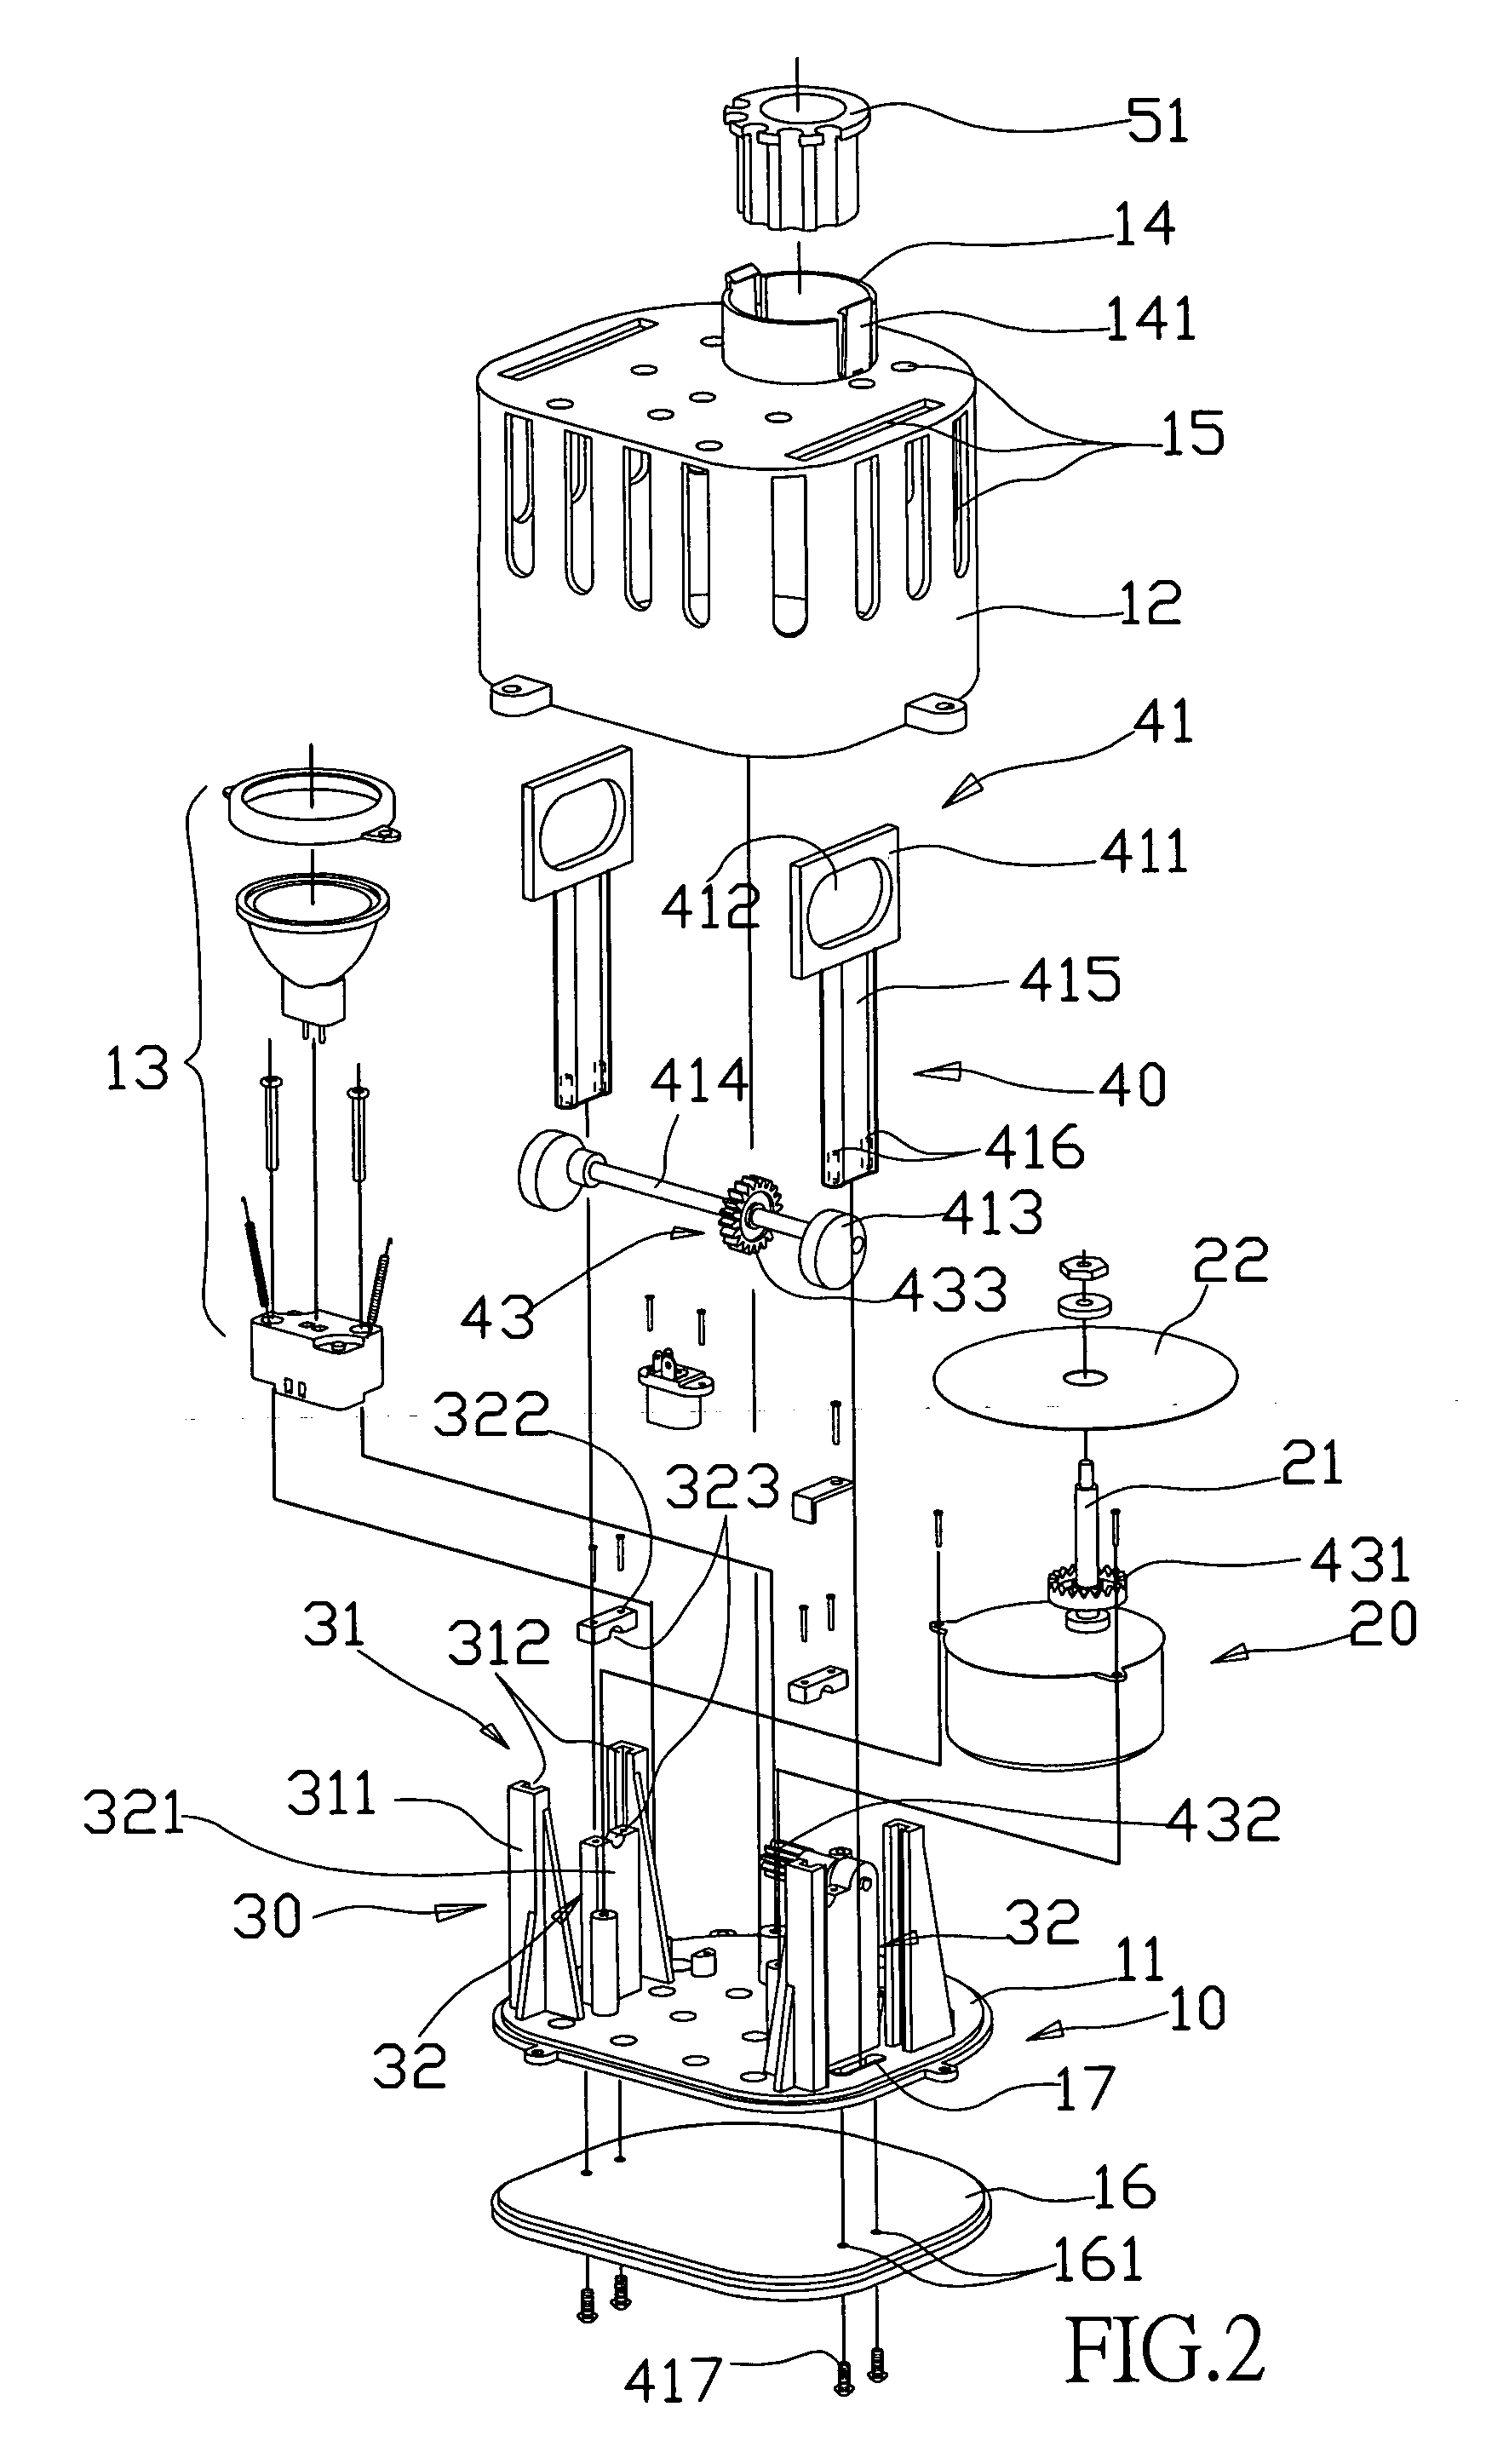 Transmission mechanism for a dynamic ornament